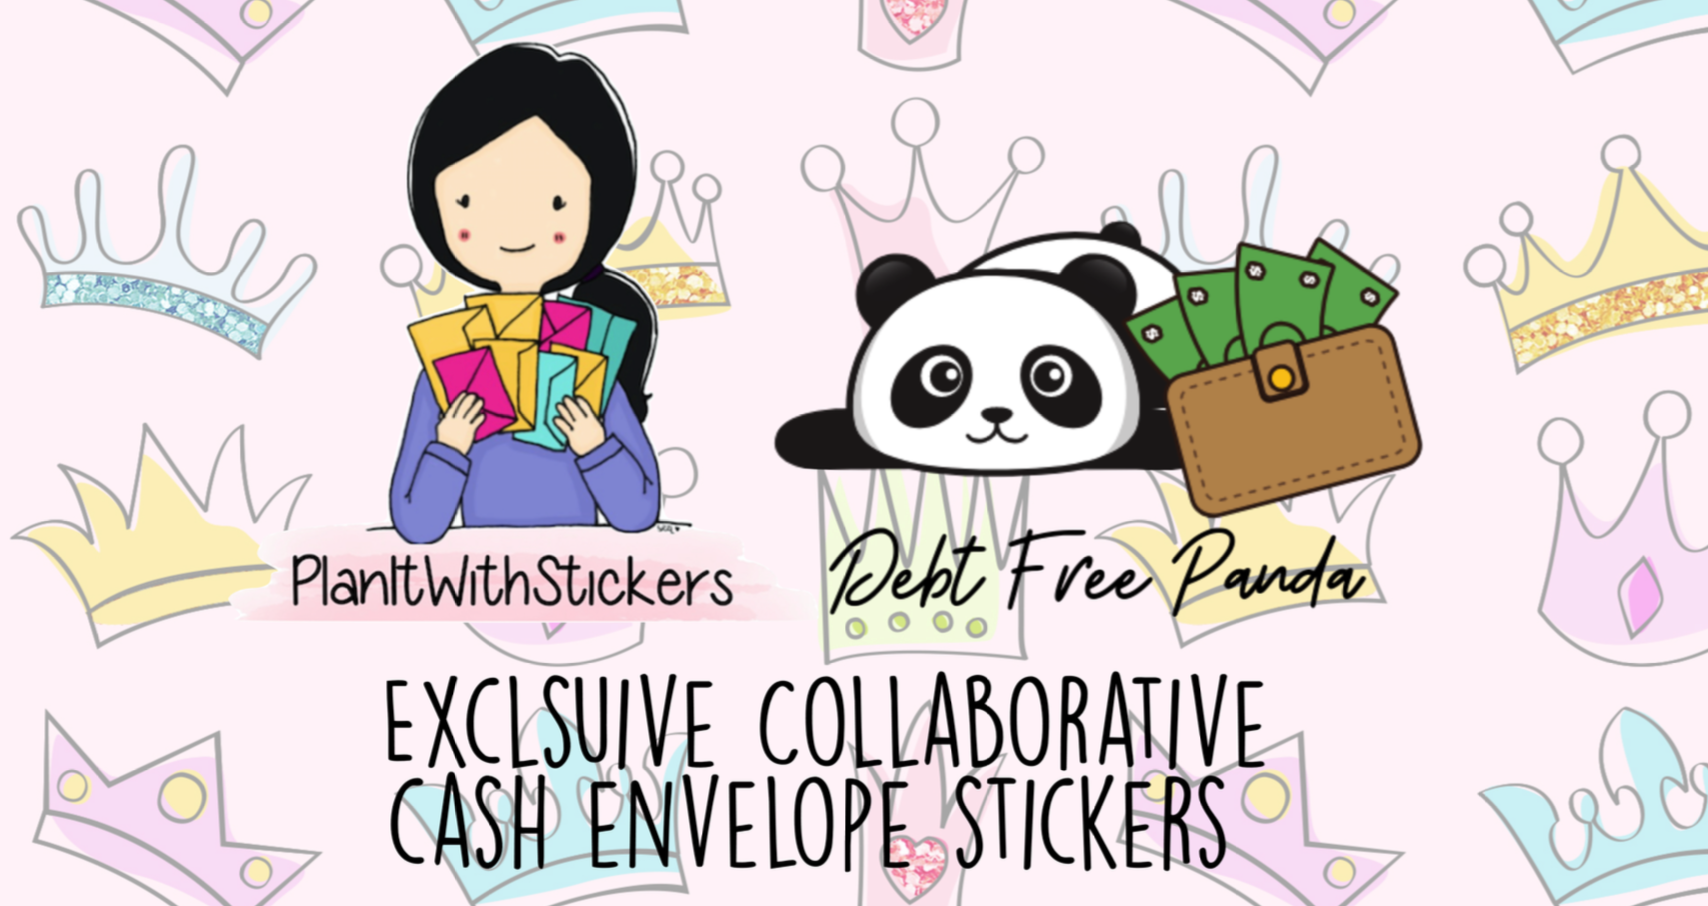 PIWS & DFP Exclusive Collaborative Cash Envelope Stickers